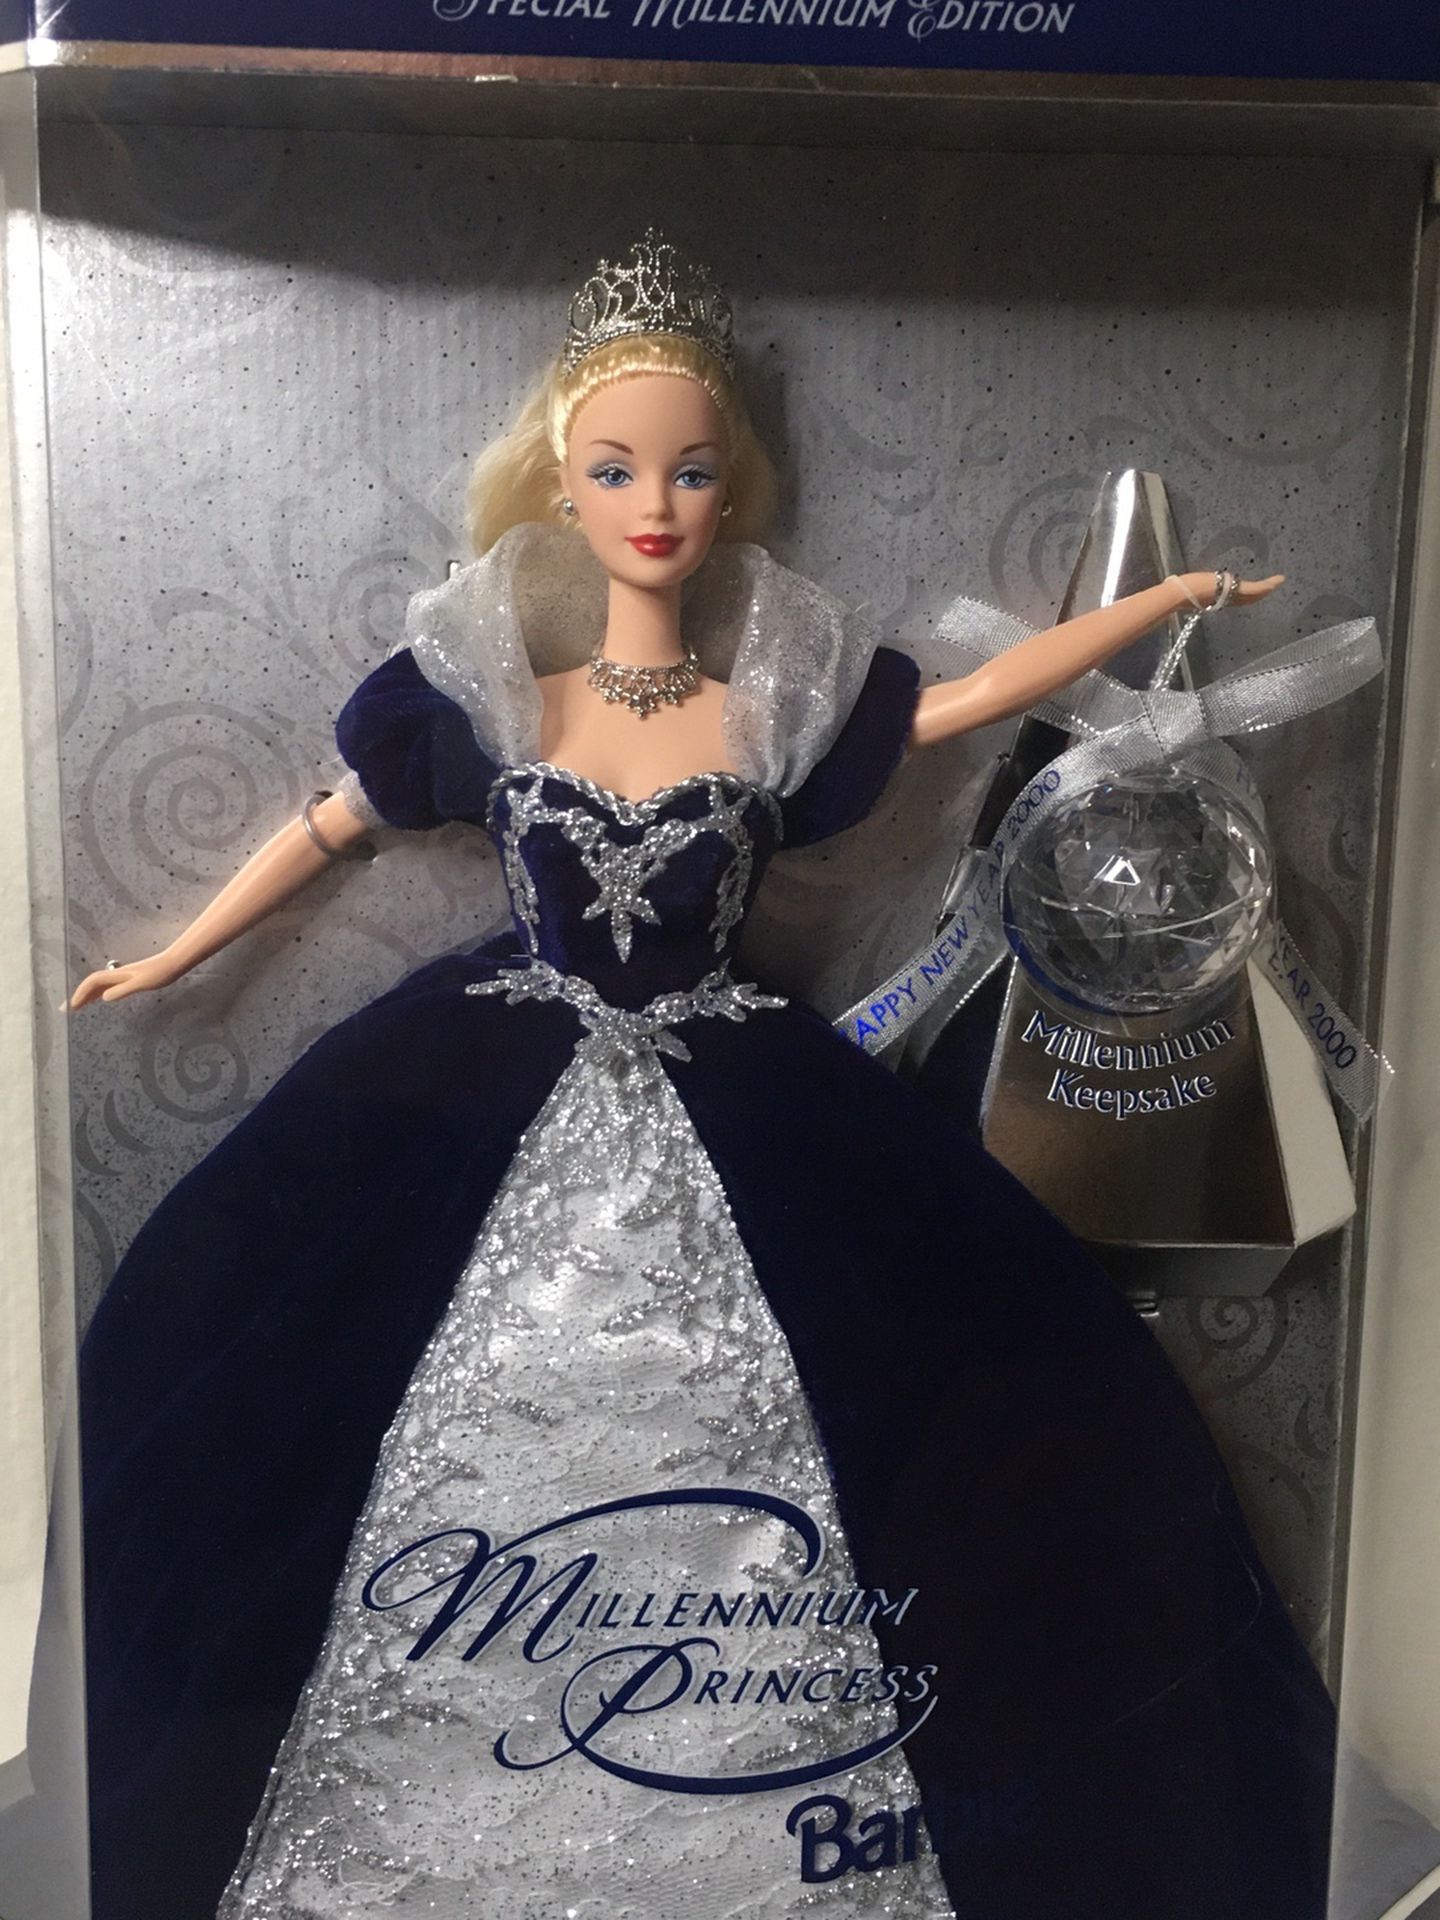 Millennium Princess Barbie